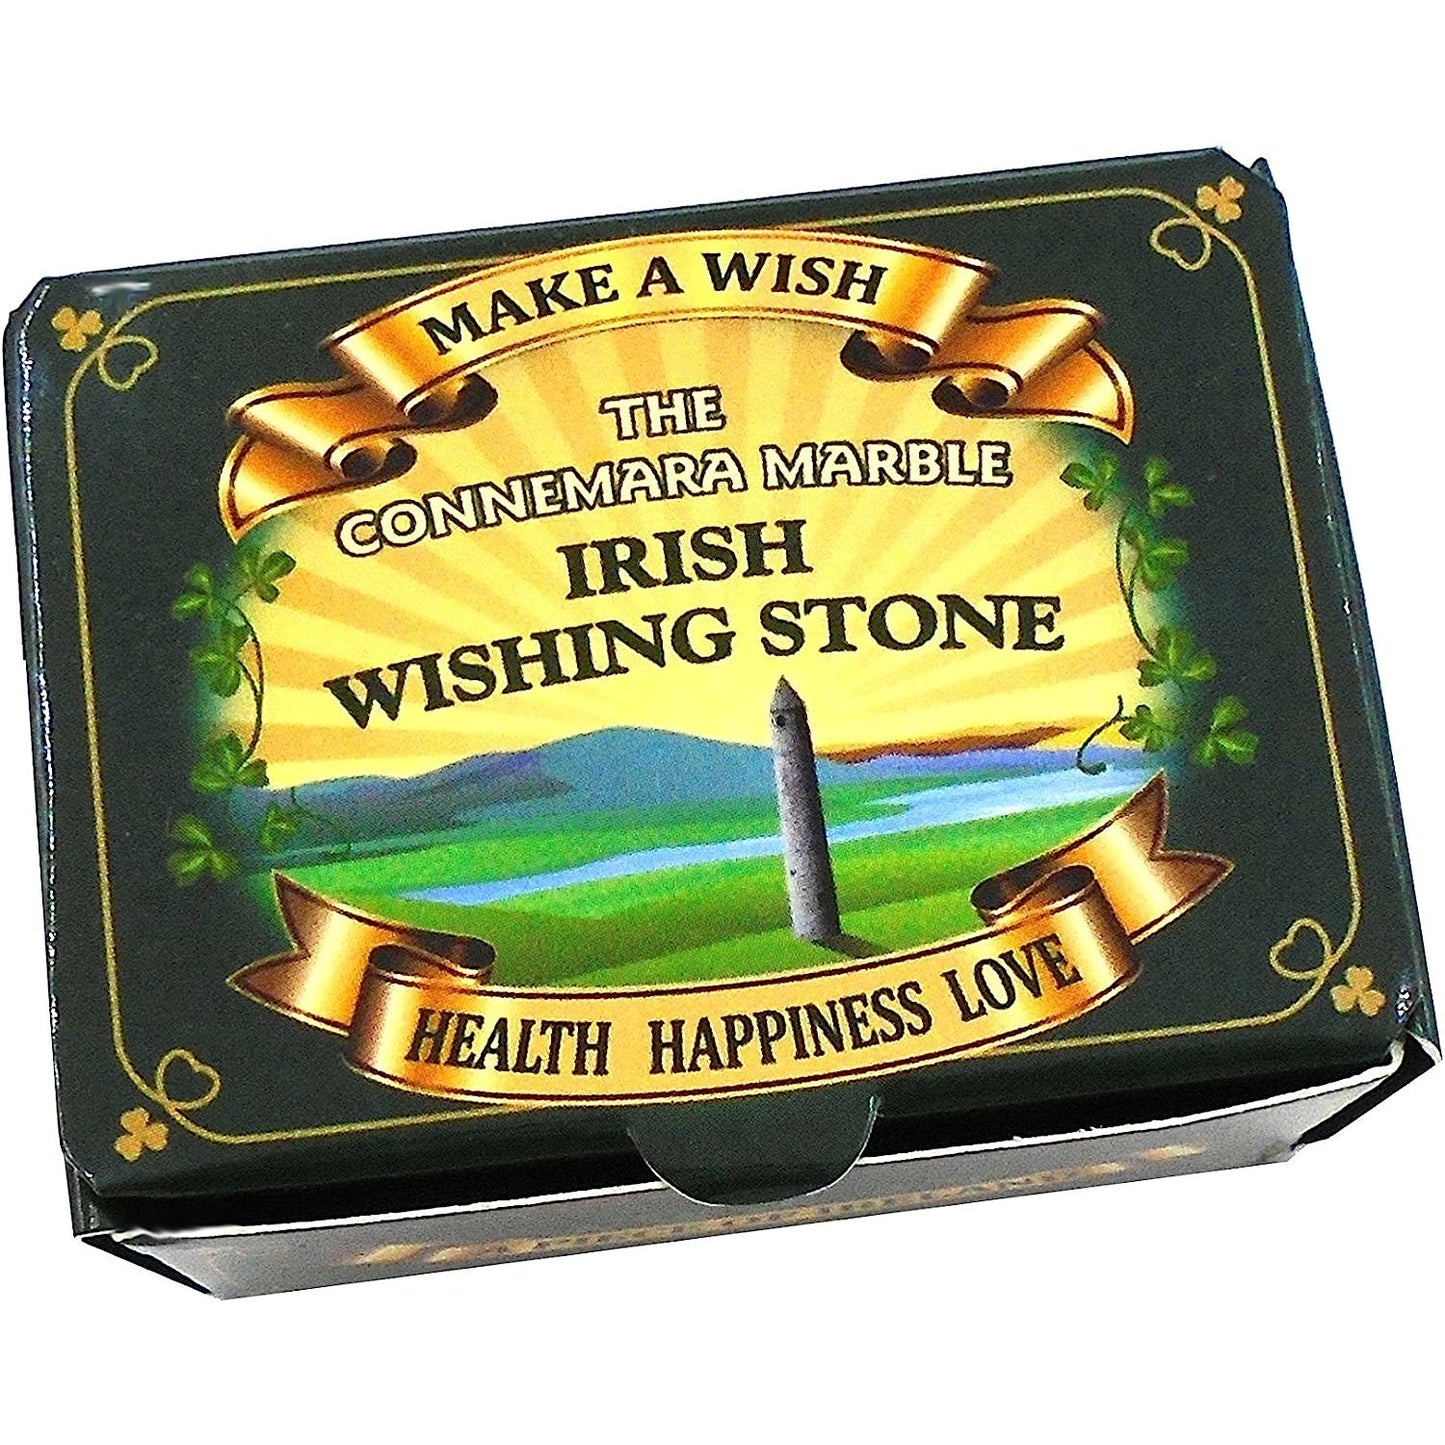 An Irish wishing stone in a gift box. The lid has text which reads, 'The Connemara marble Irish wishing stone.'